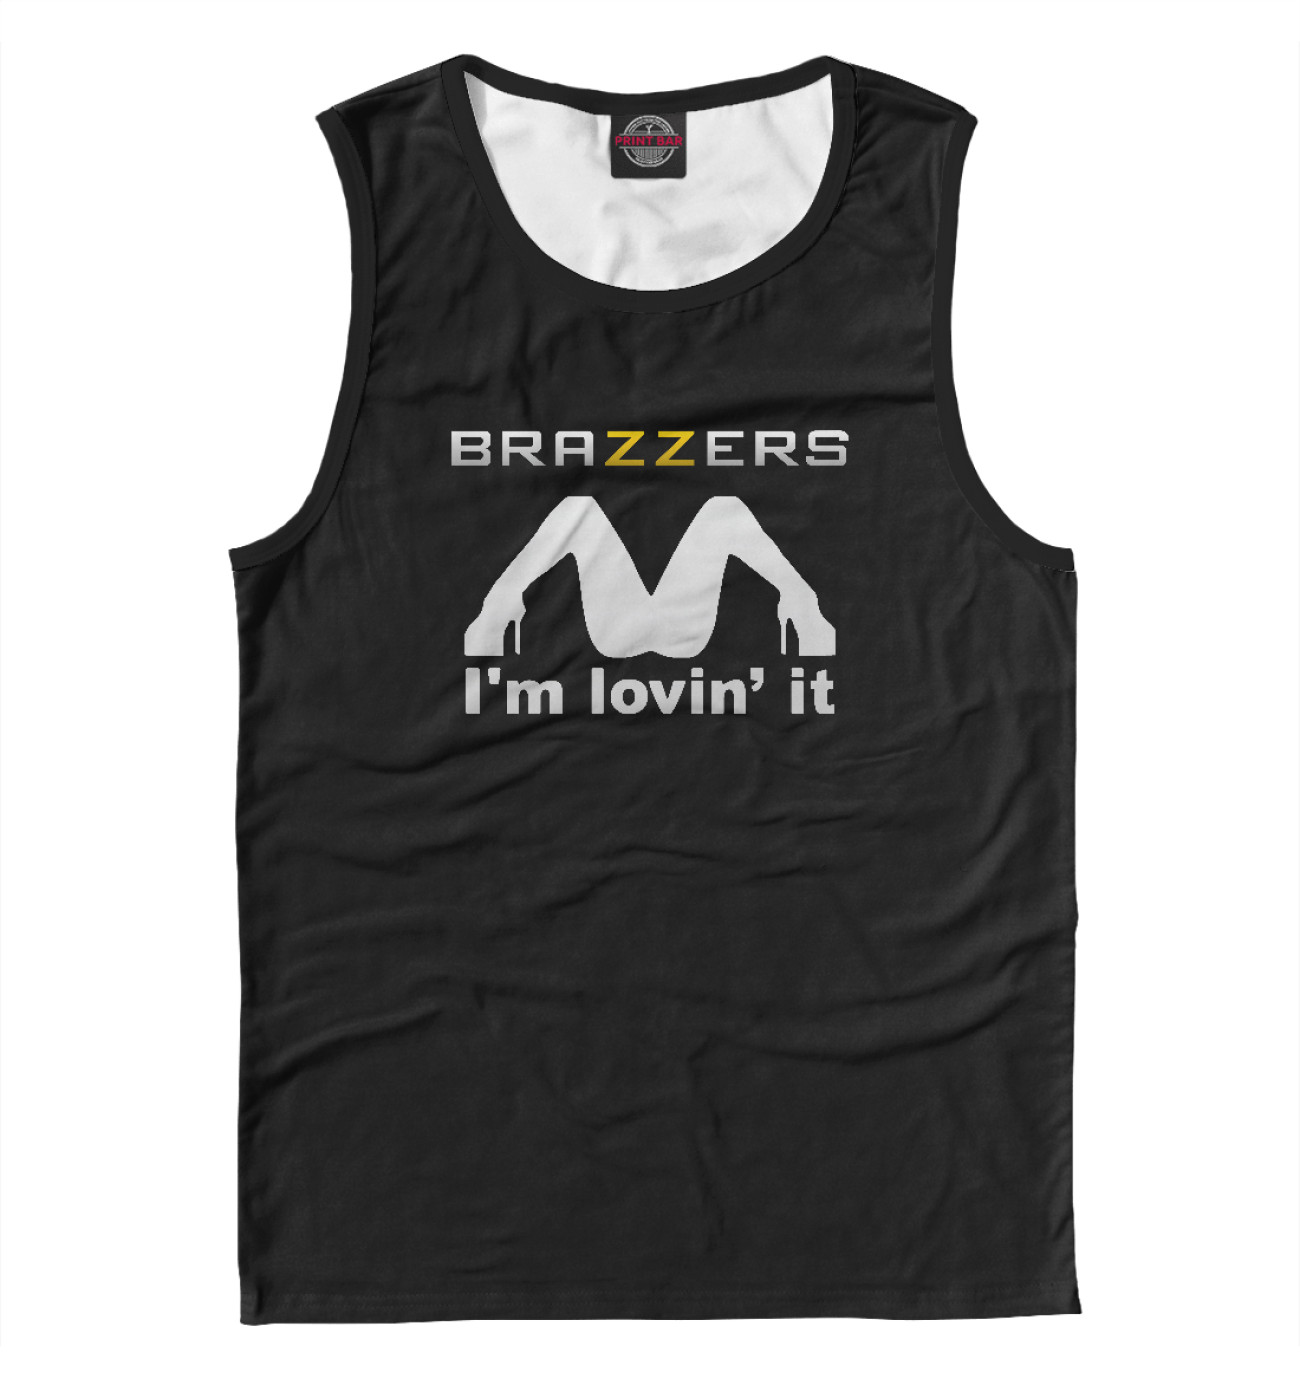 Мужская Майка Brazzers i'm lovin' it, артикул: BRZ-802914-may-2